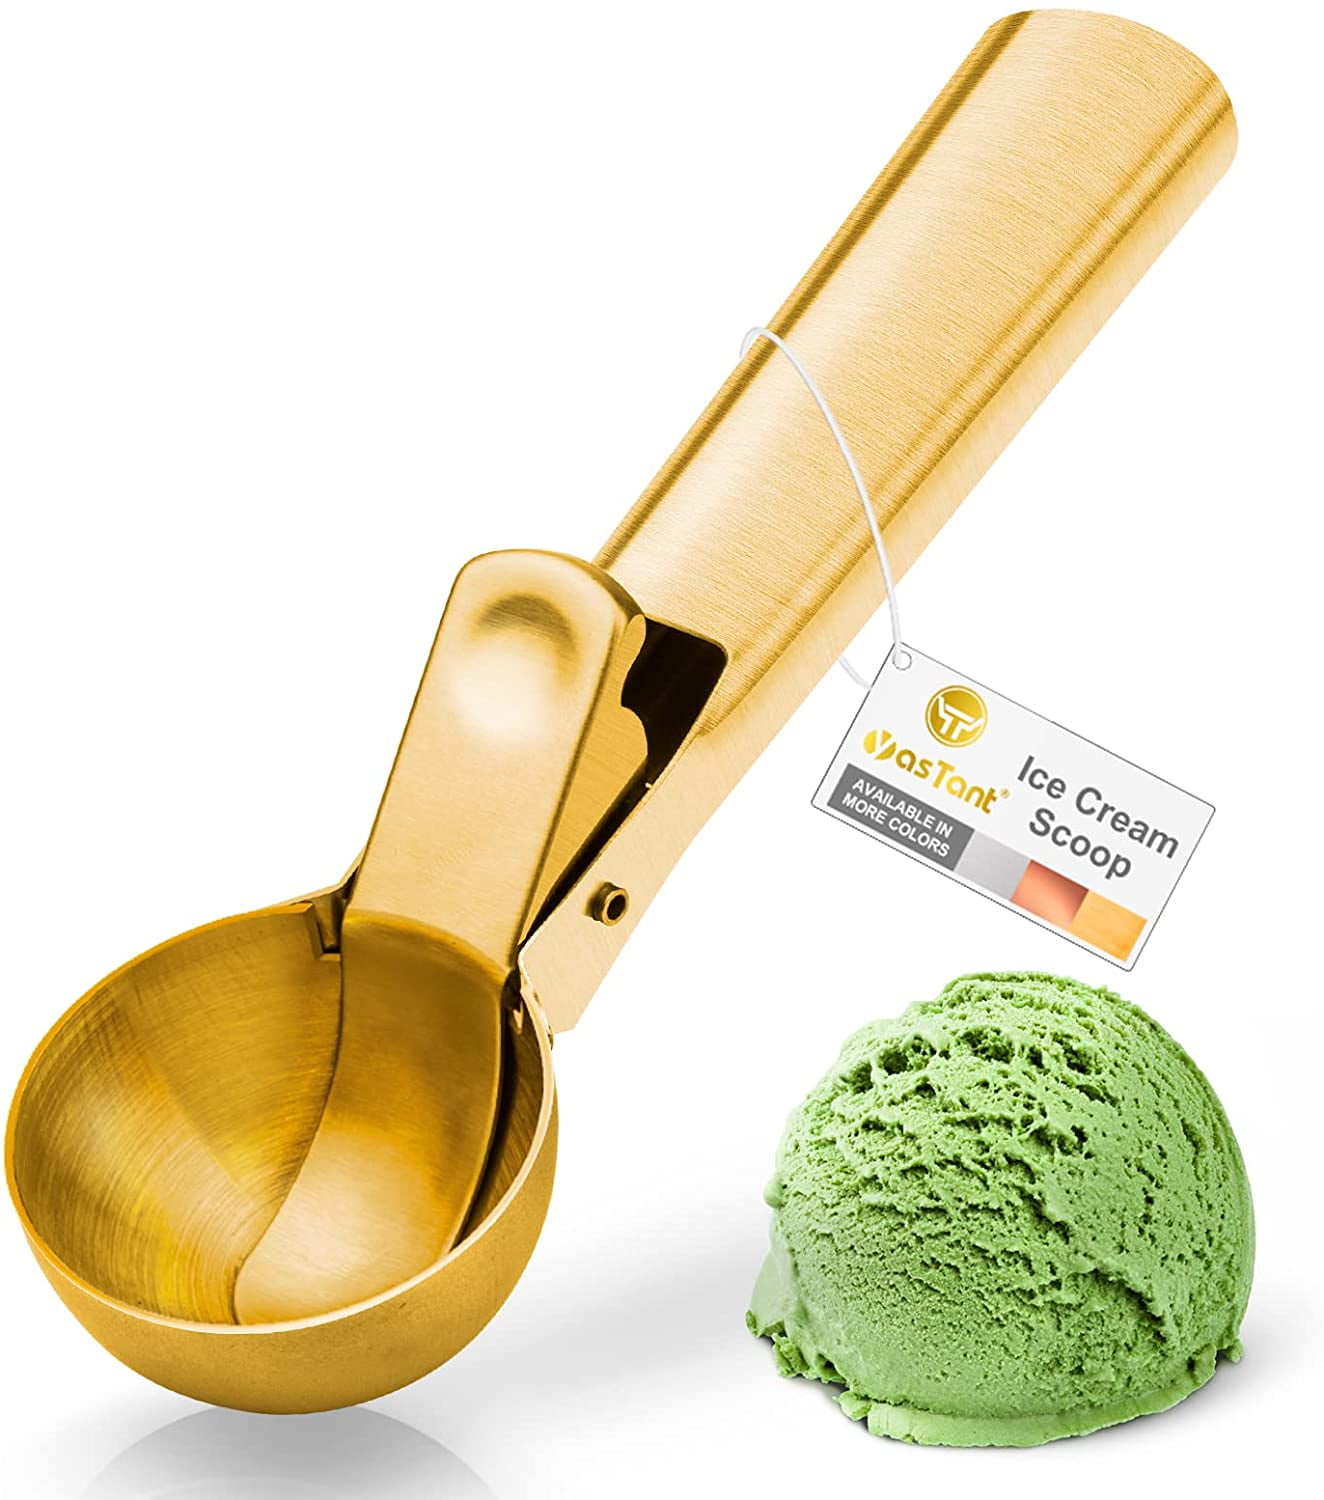 Wholesale ice cream scoop holder to Make Delicious Ice Cream